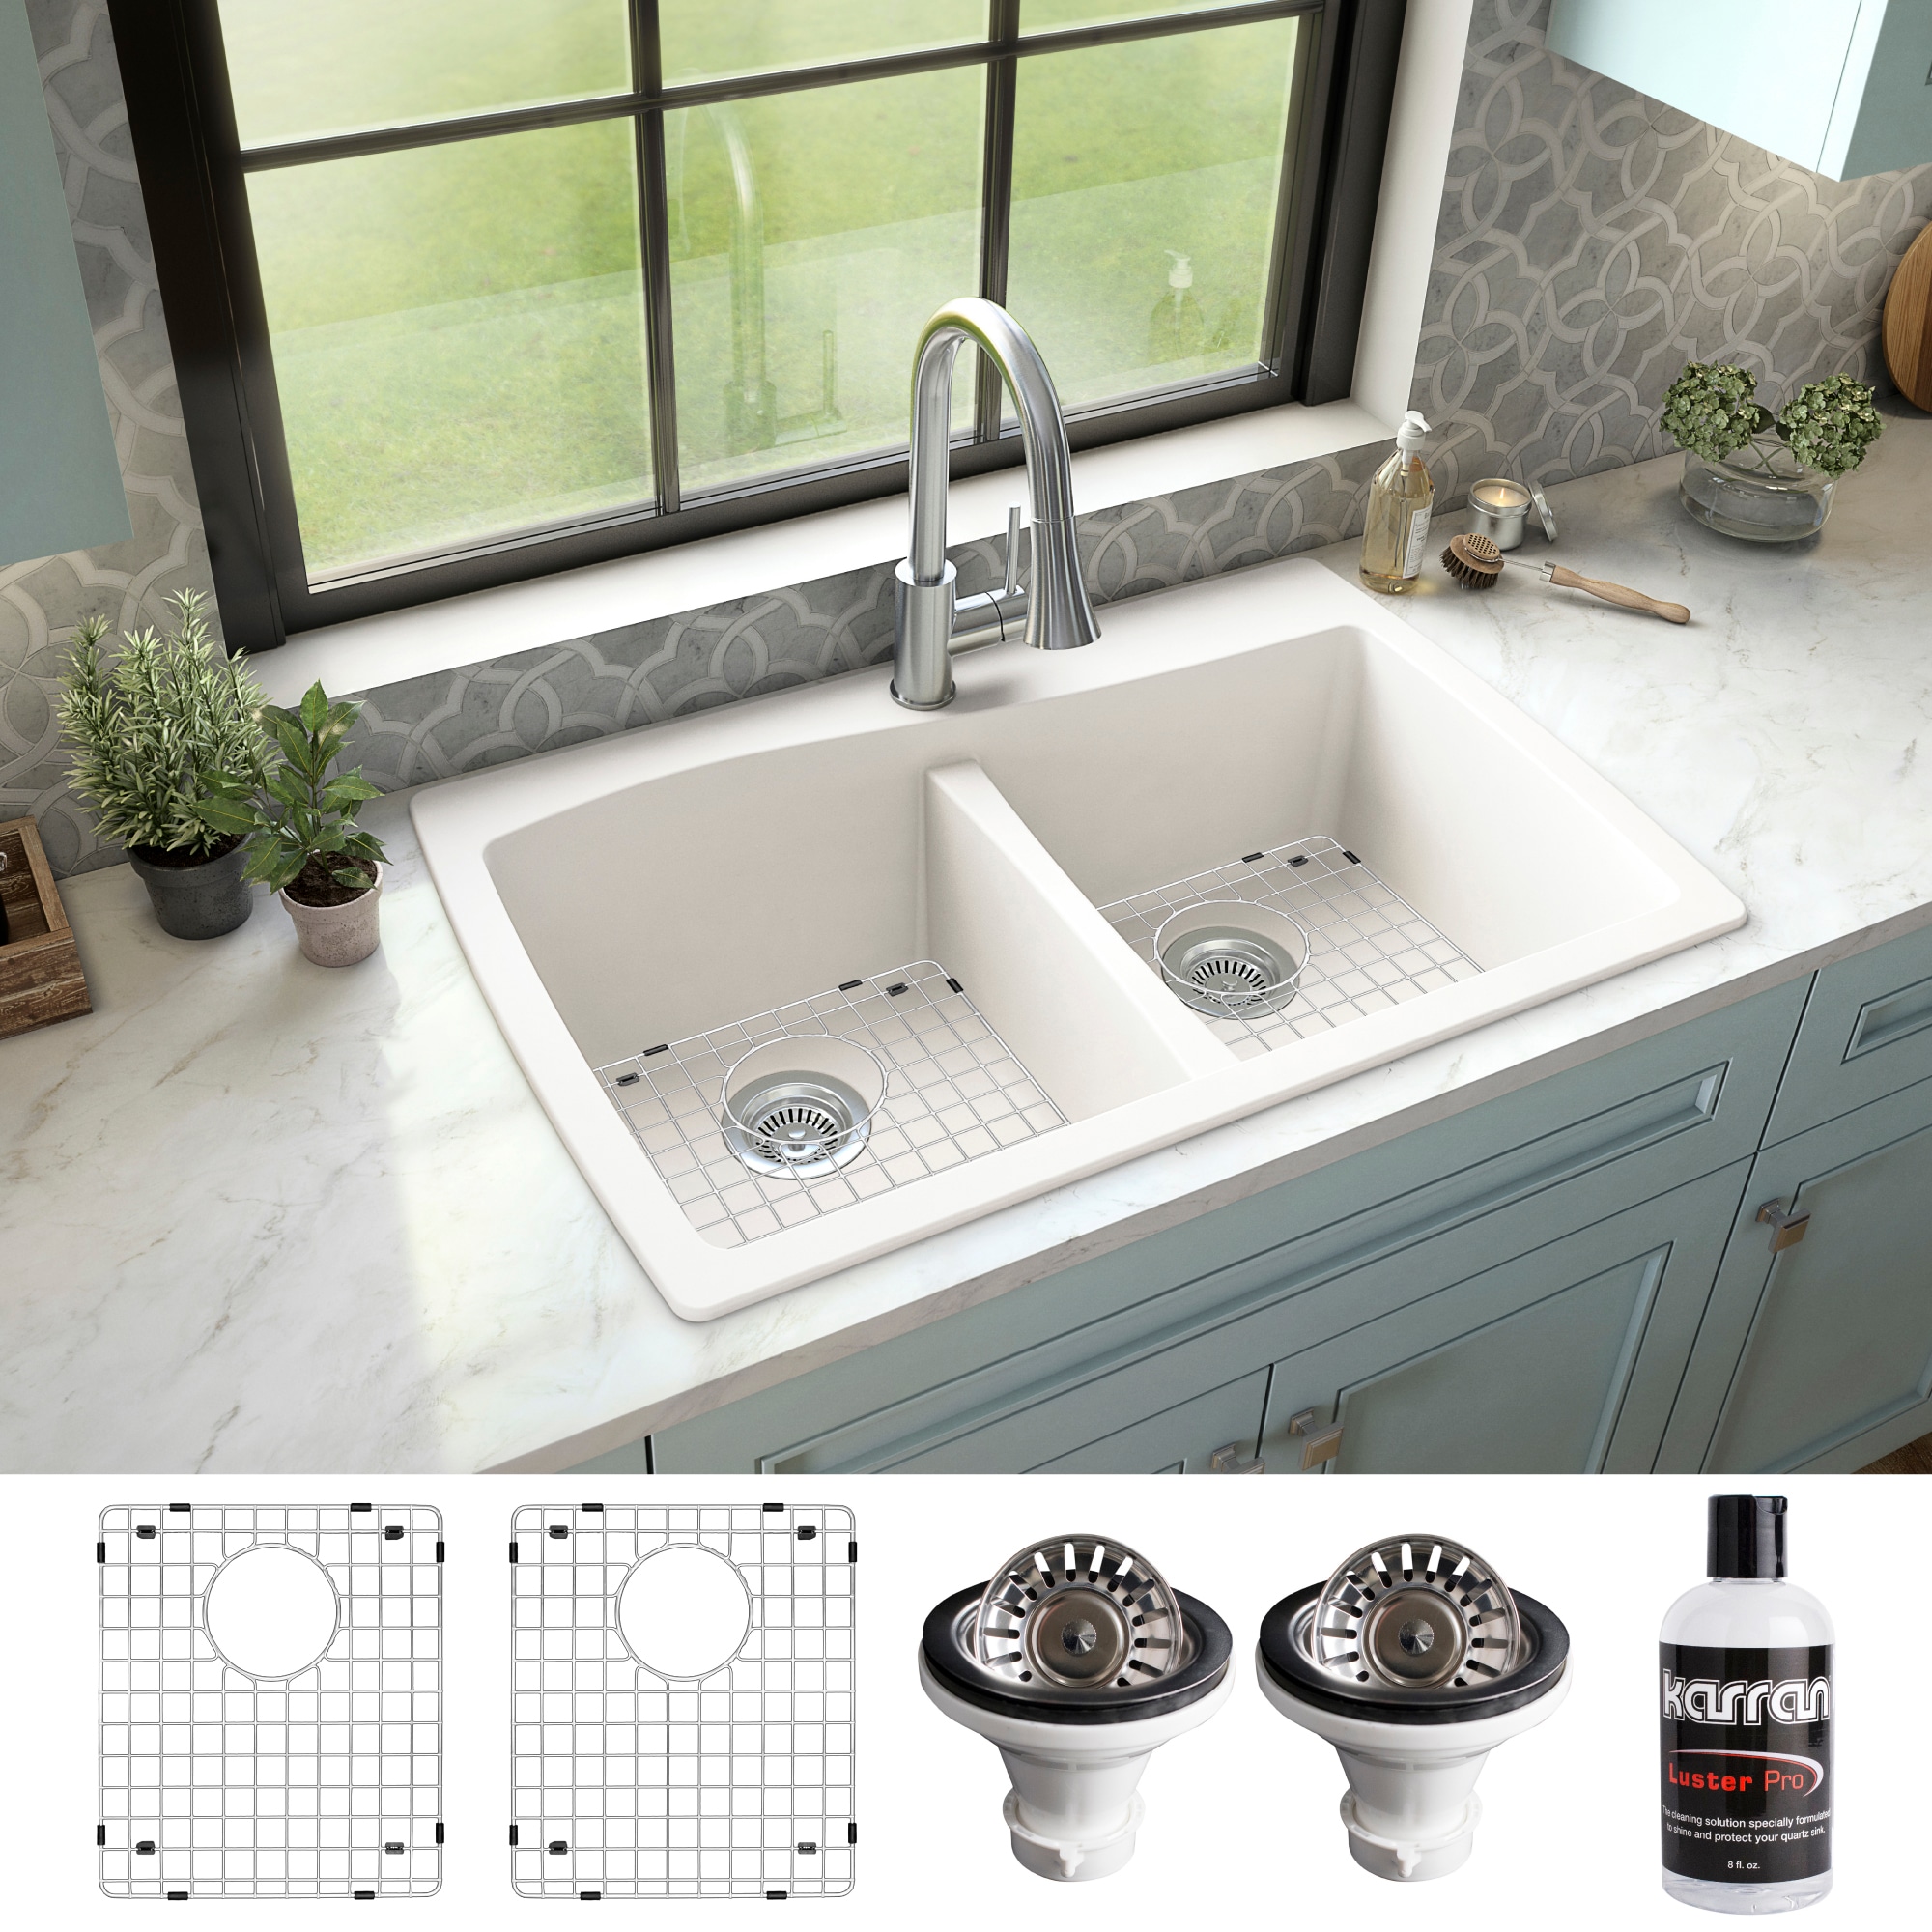 45 Black Quartz Kitchen Sink Double Bowl Drop-In Sink with Drain Board -Wehomz